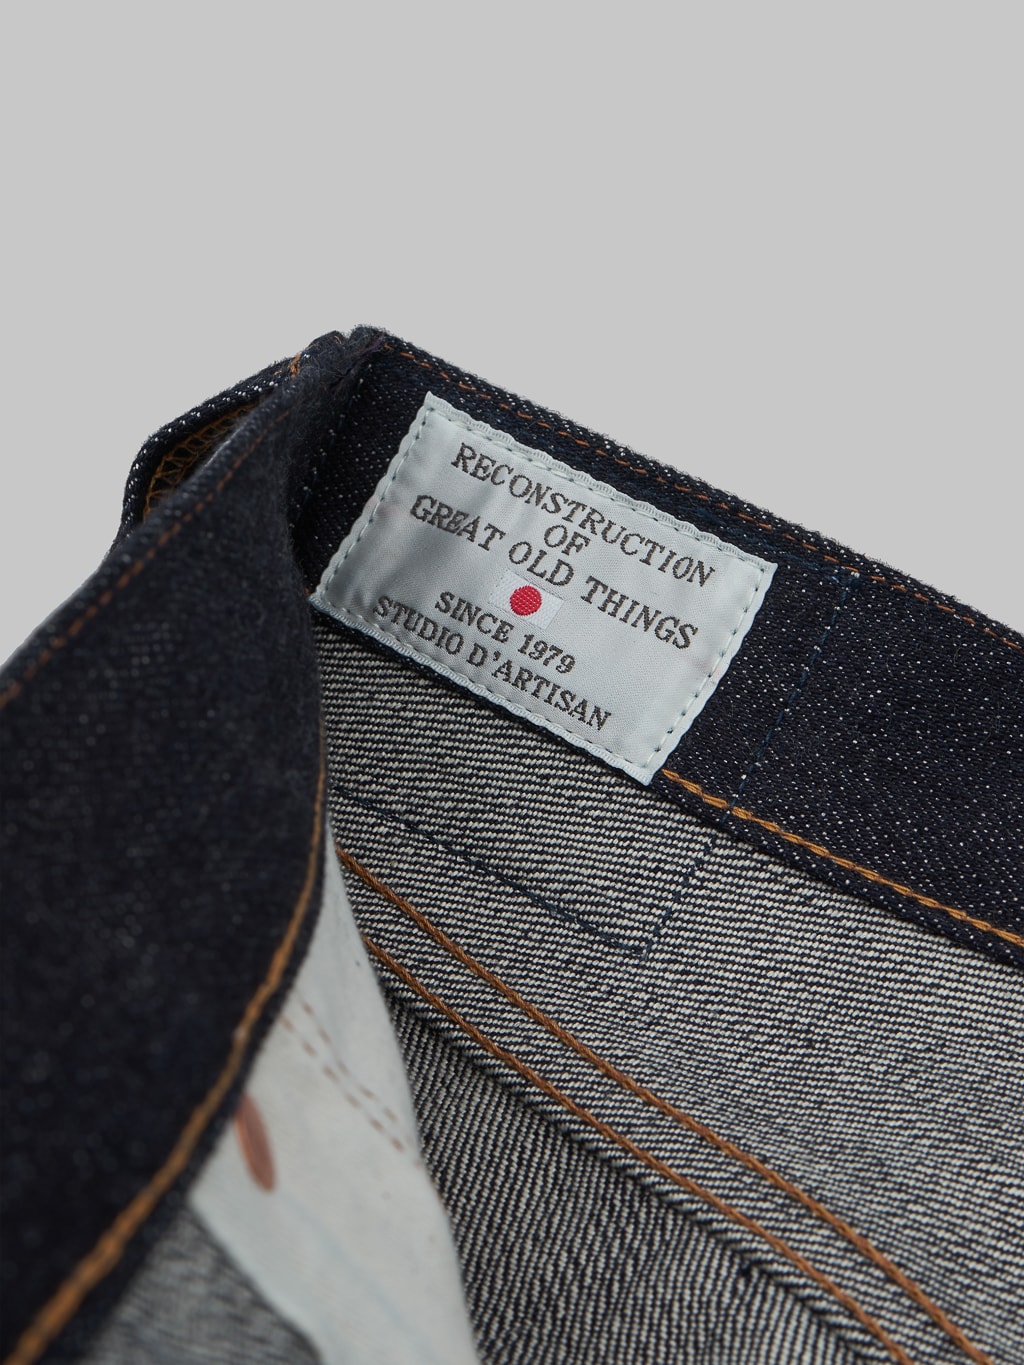 Studio DArtisan Suvin Gold D1755 Regular Straight Narrow Jeans interior tag